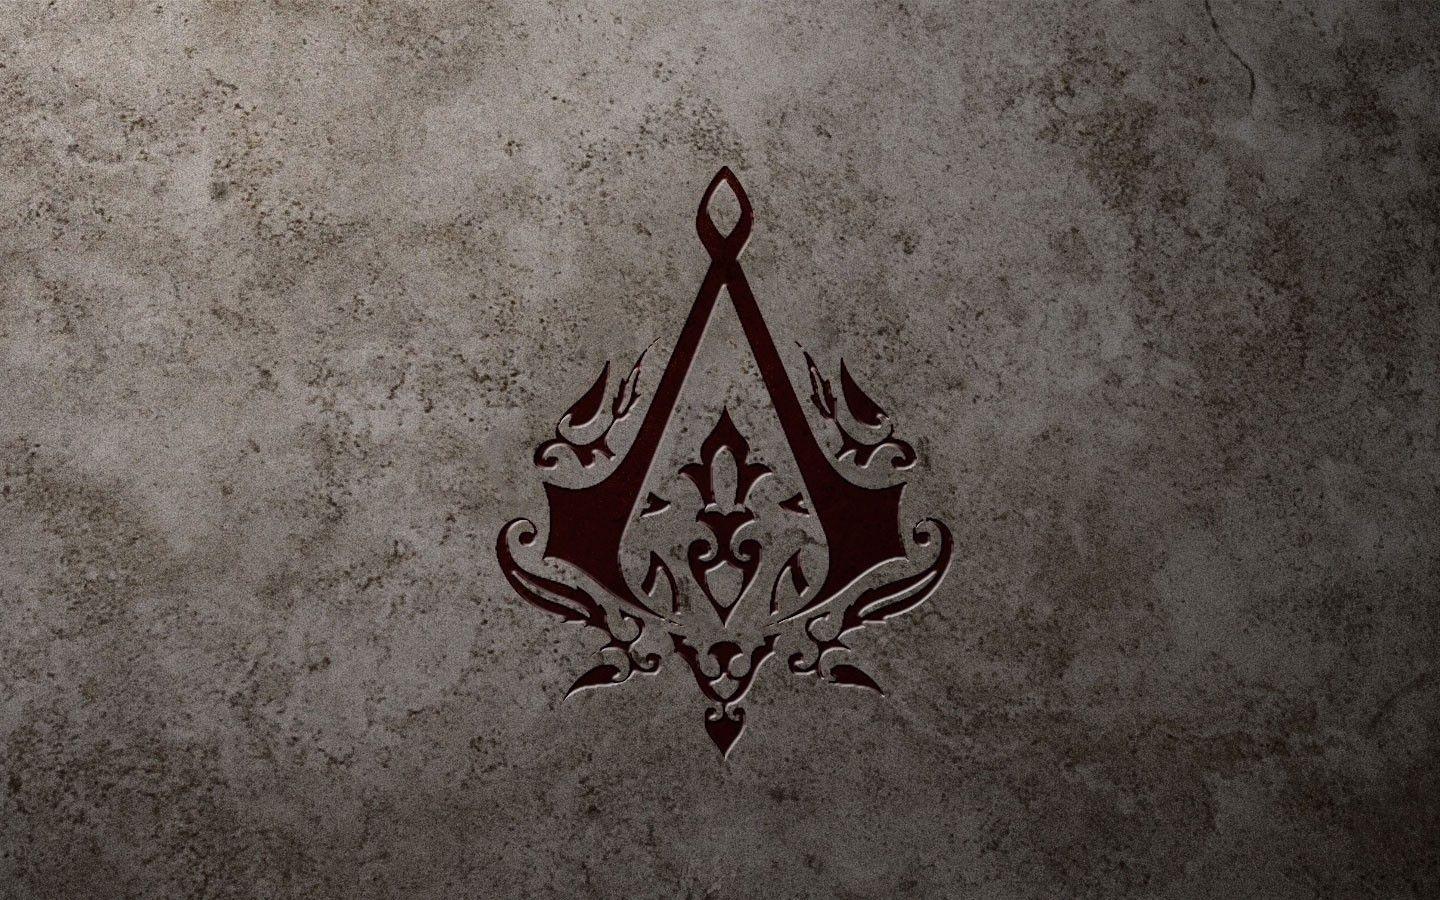 Assassins creed logos wallpaper. PC